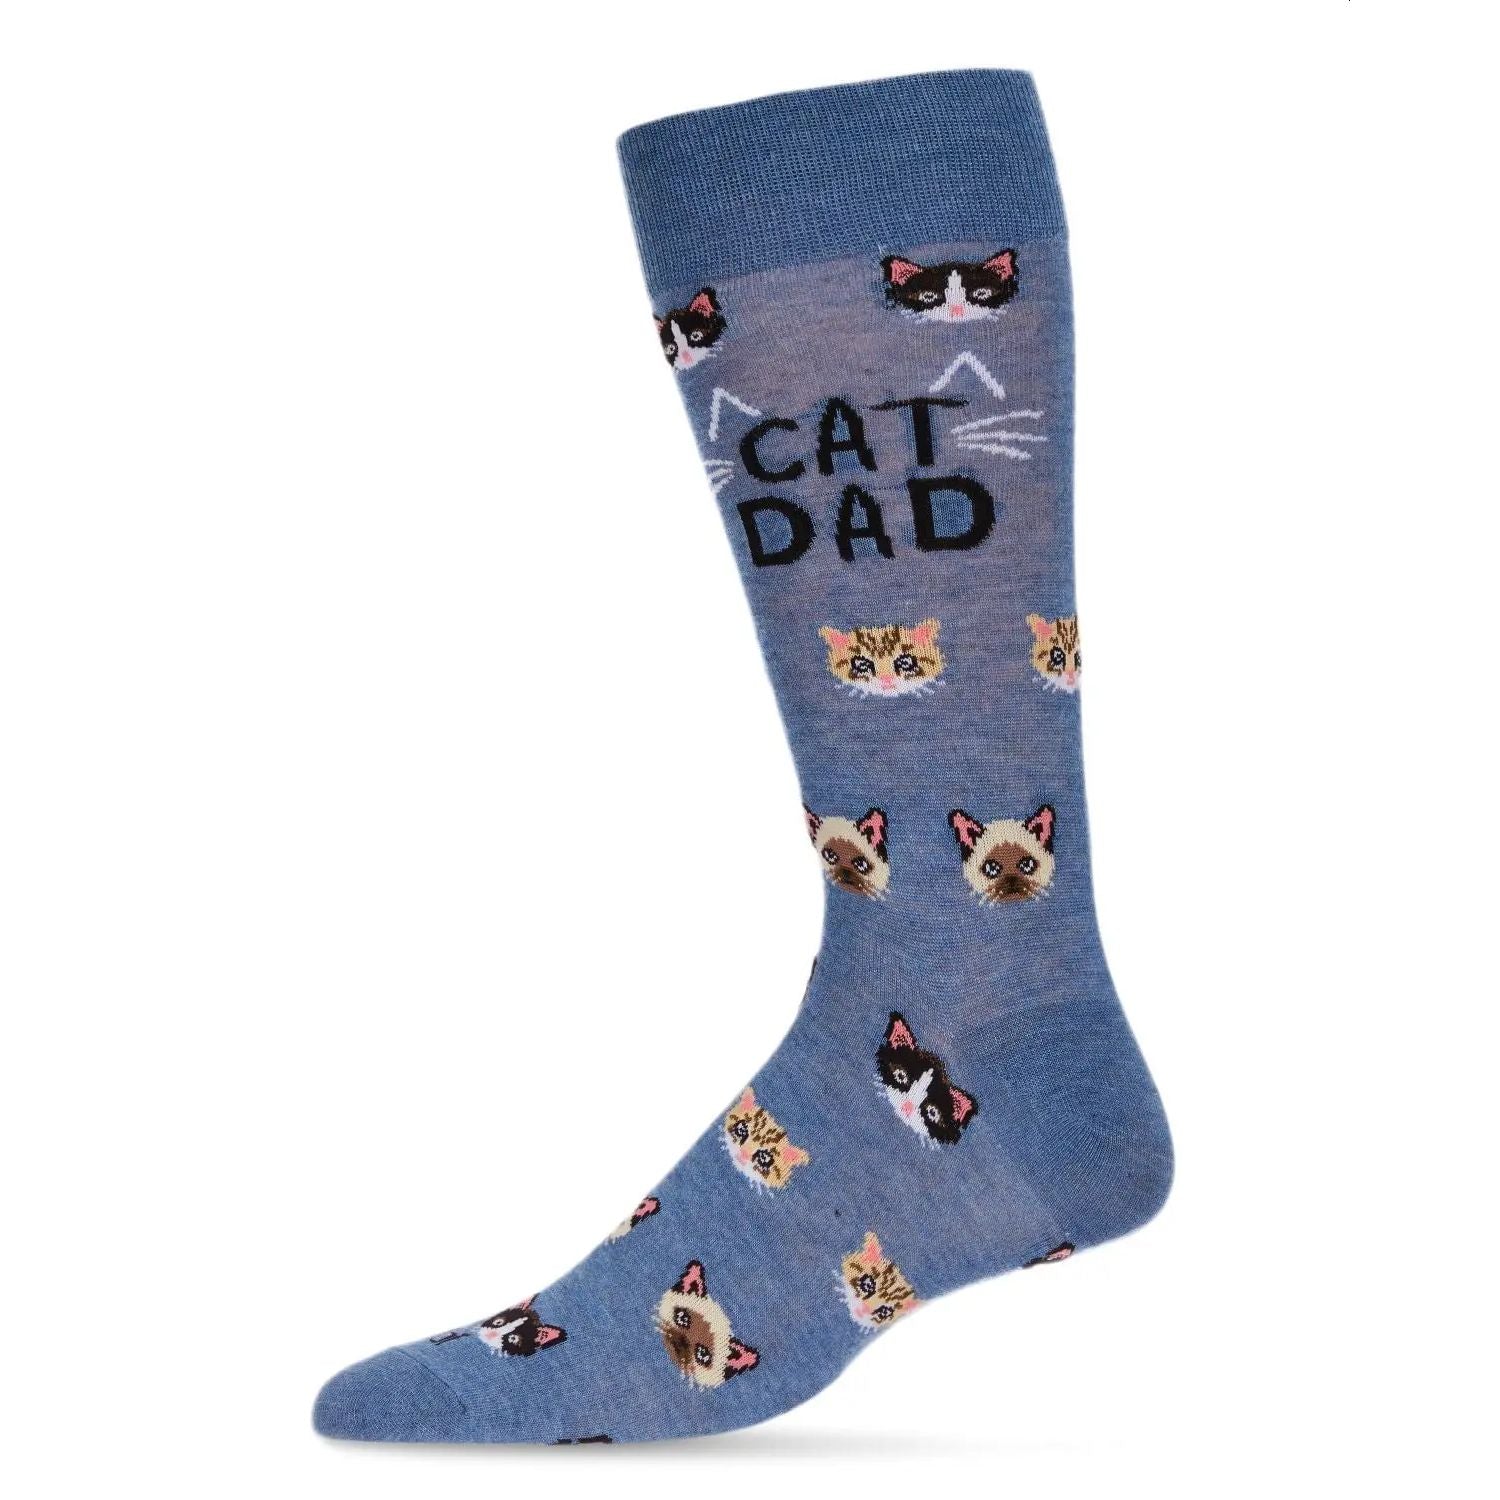 Cat Dad Socks, Denim Heather Blue